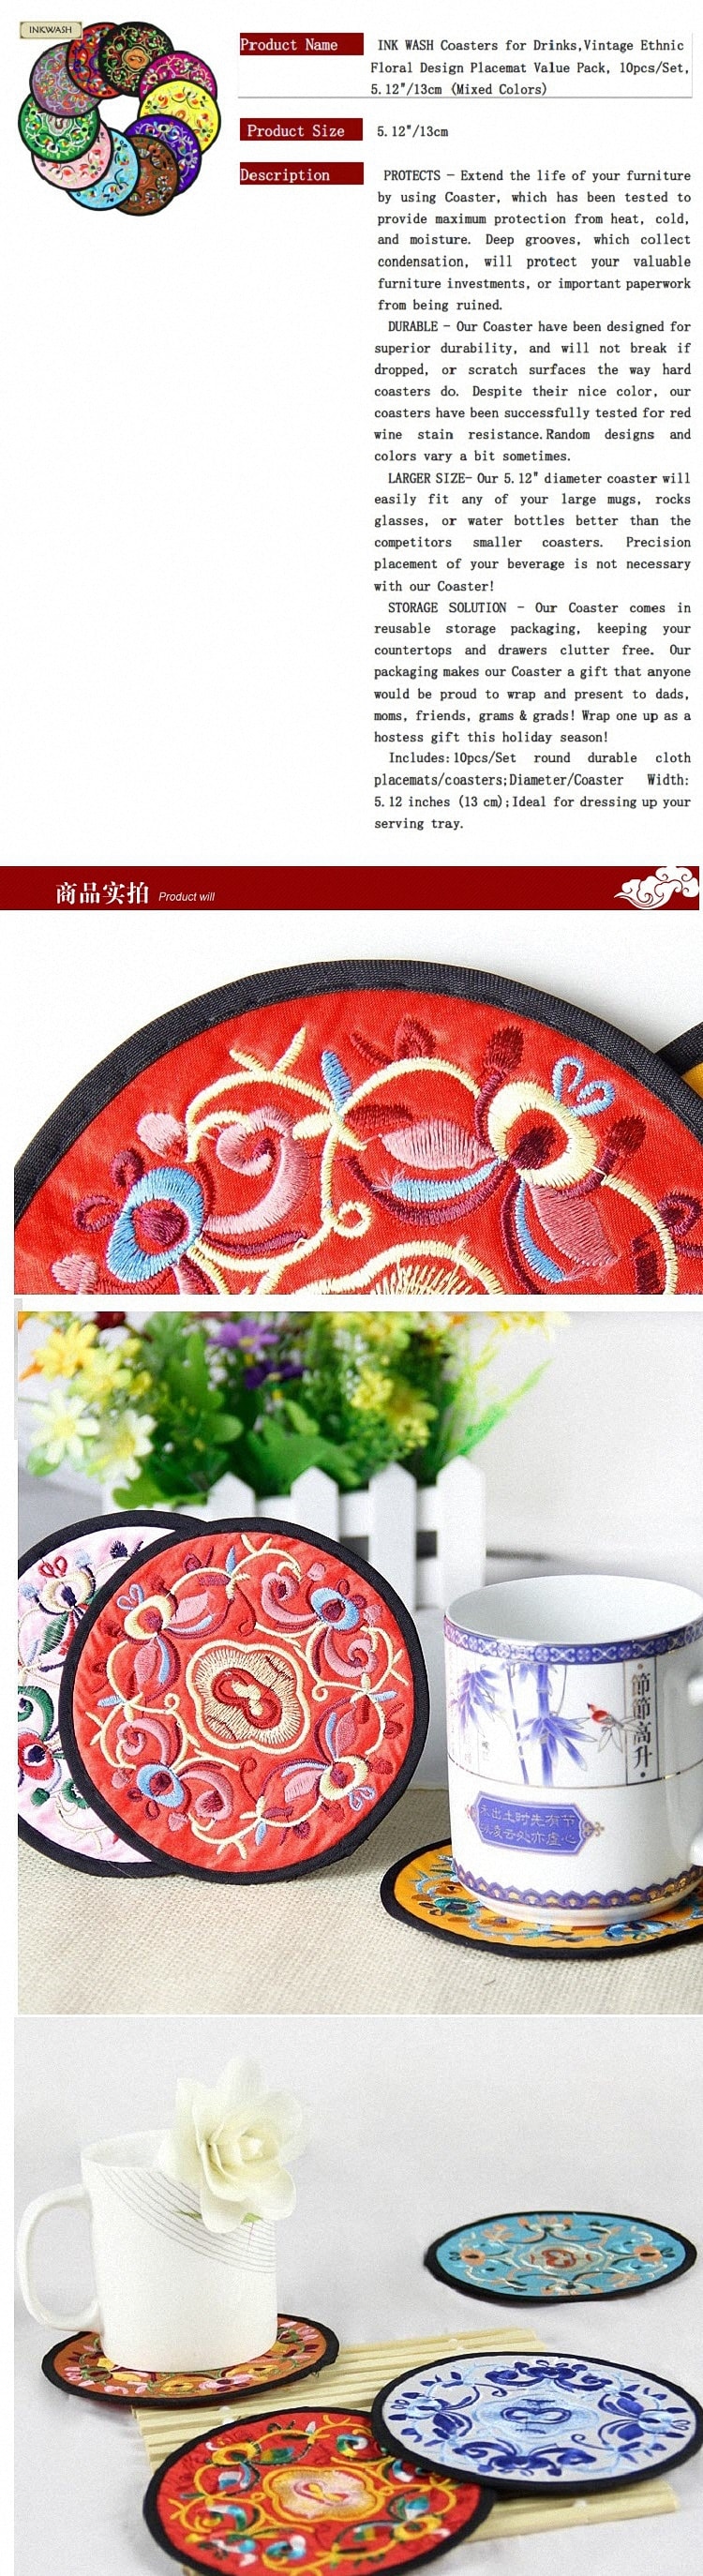 Coasters for DrinksVintage Ethnic Floral Design Placemat Value Pack 10pcs